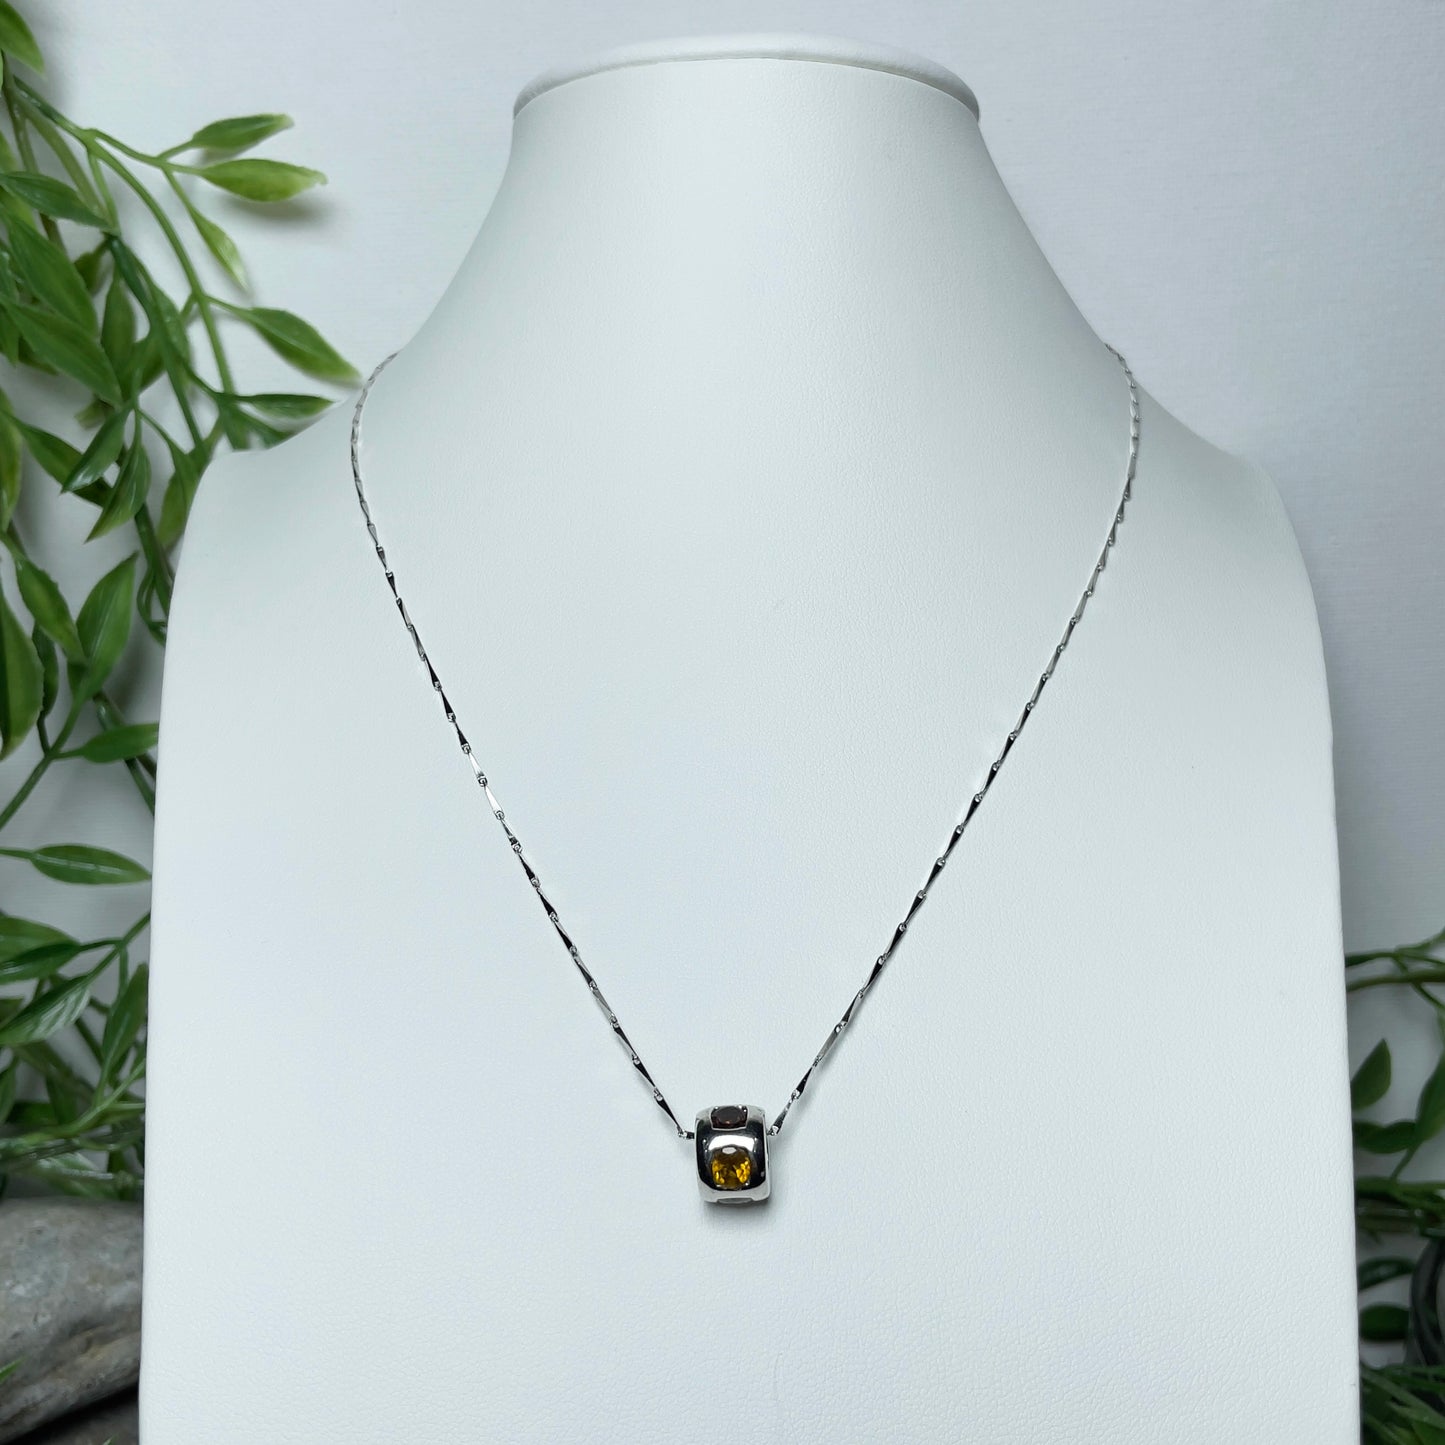 Stonelry Elegant Tourmaline & Zircon Pendant on S925 Sterling Silver Chain Necklace